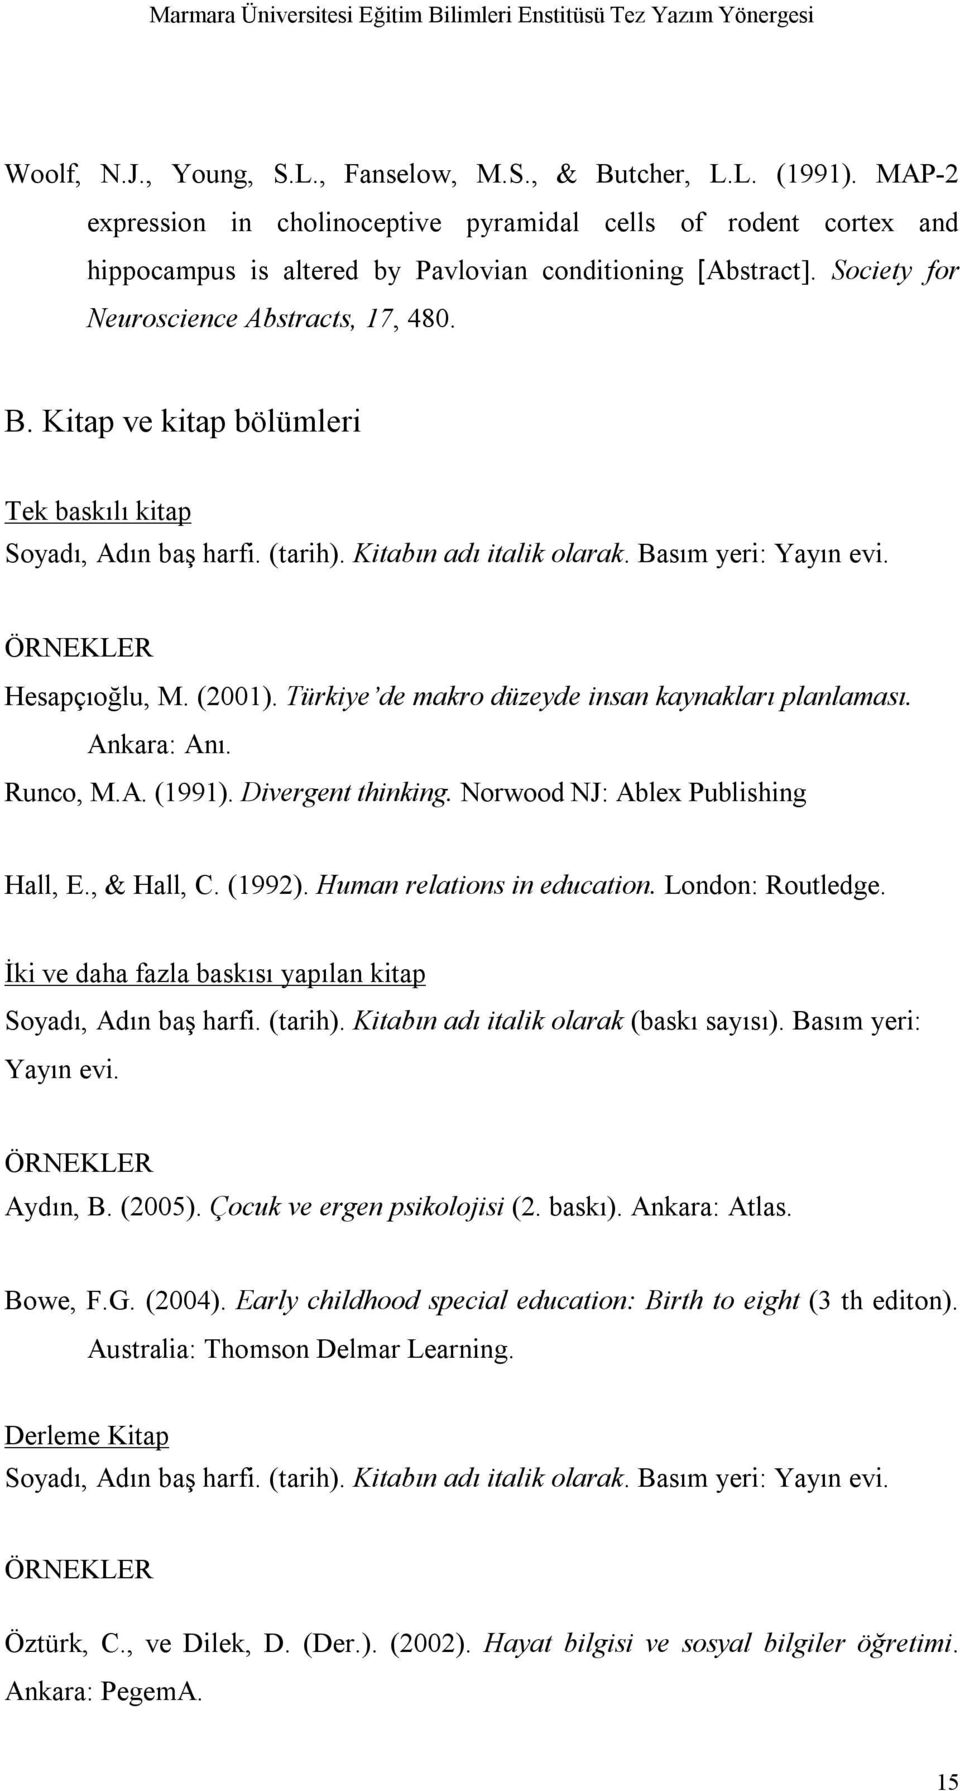 Türkiye de makro düzeyde insan kaynakları planlaması. Ankara: Anı. Runco, M.A. (1991). Divergent thinking. Norwood NJ: Ablex Publishing Hall, E., & Hall, C. (1992). Human relations in education.